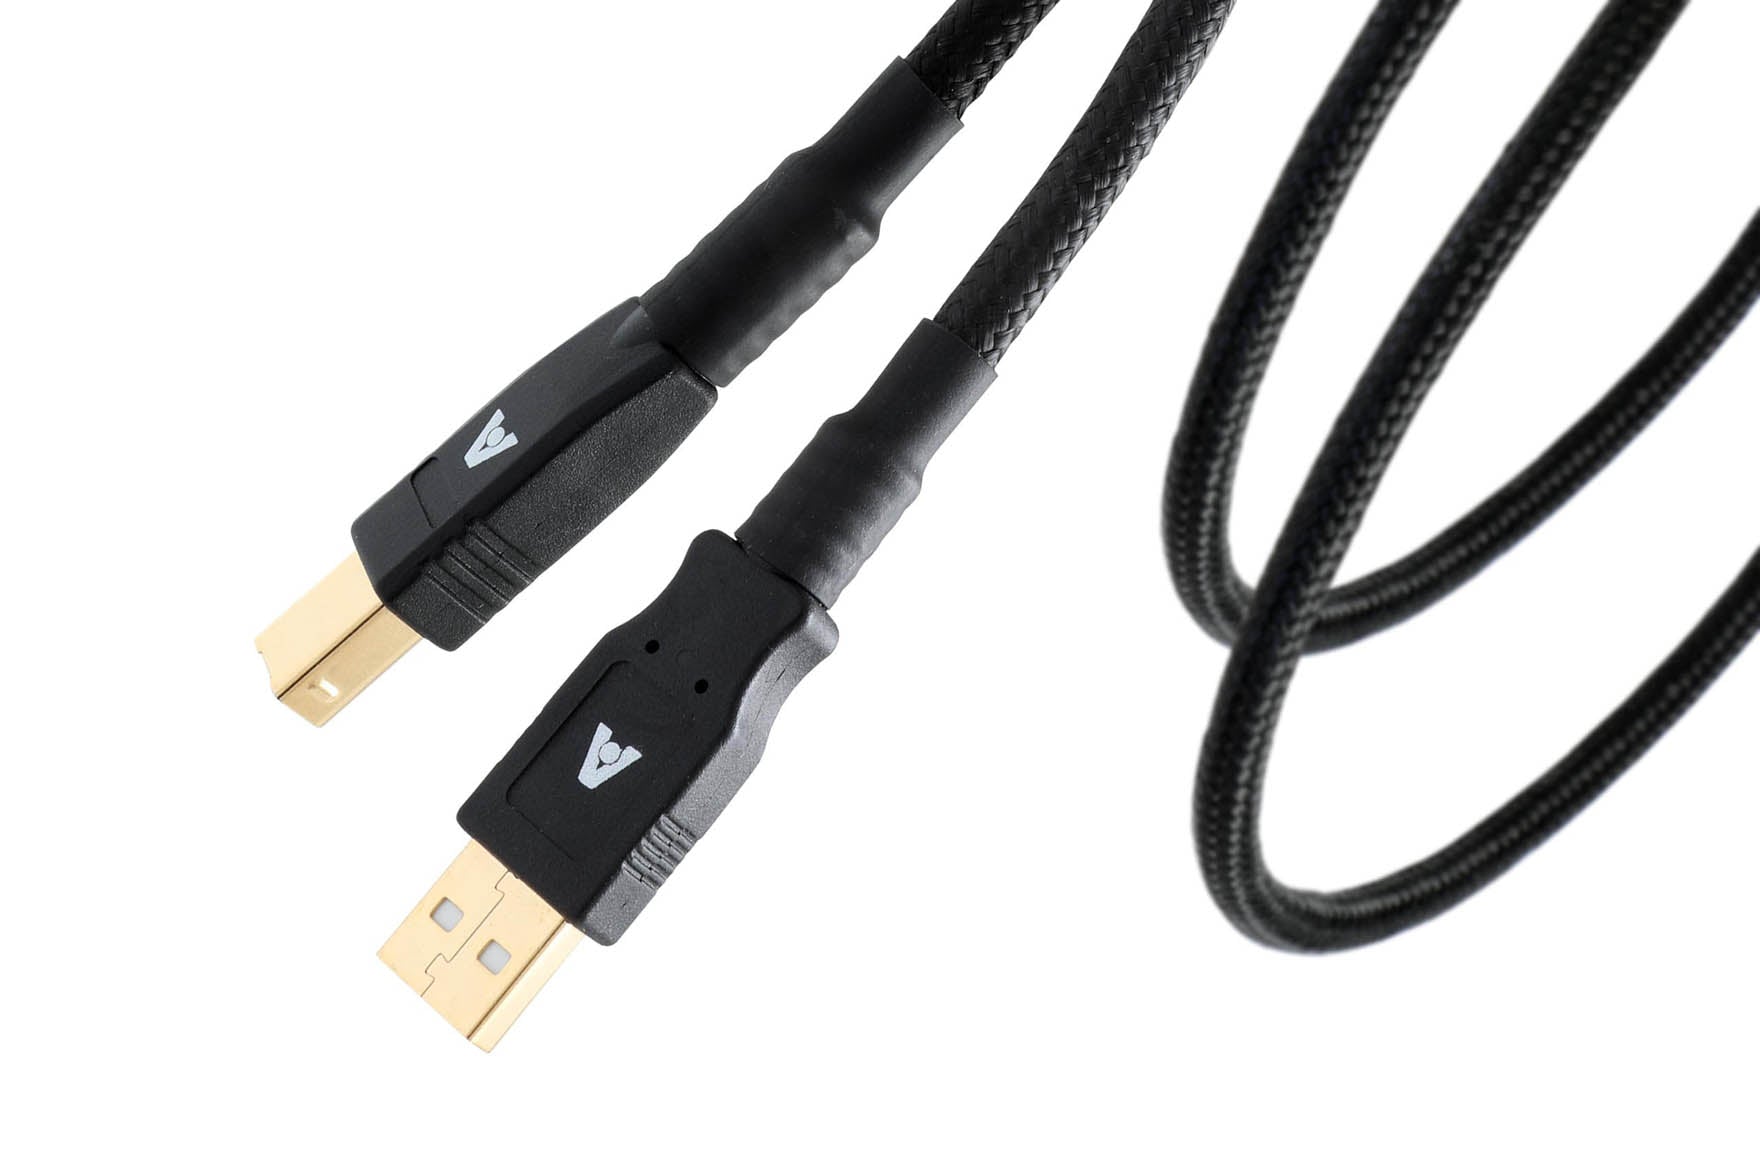 Atlas Hyper sc USB (Type A to B connector)